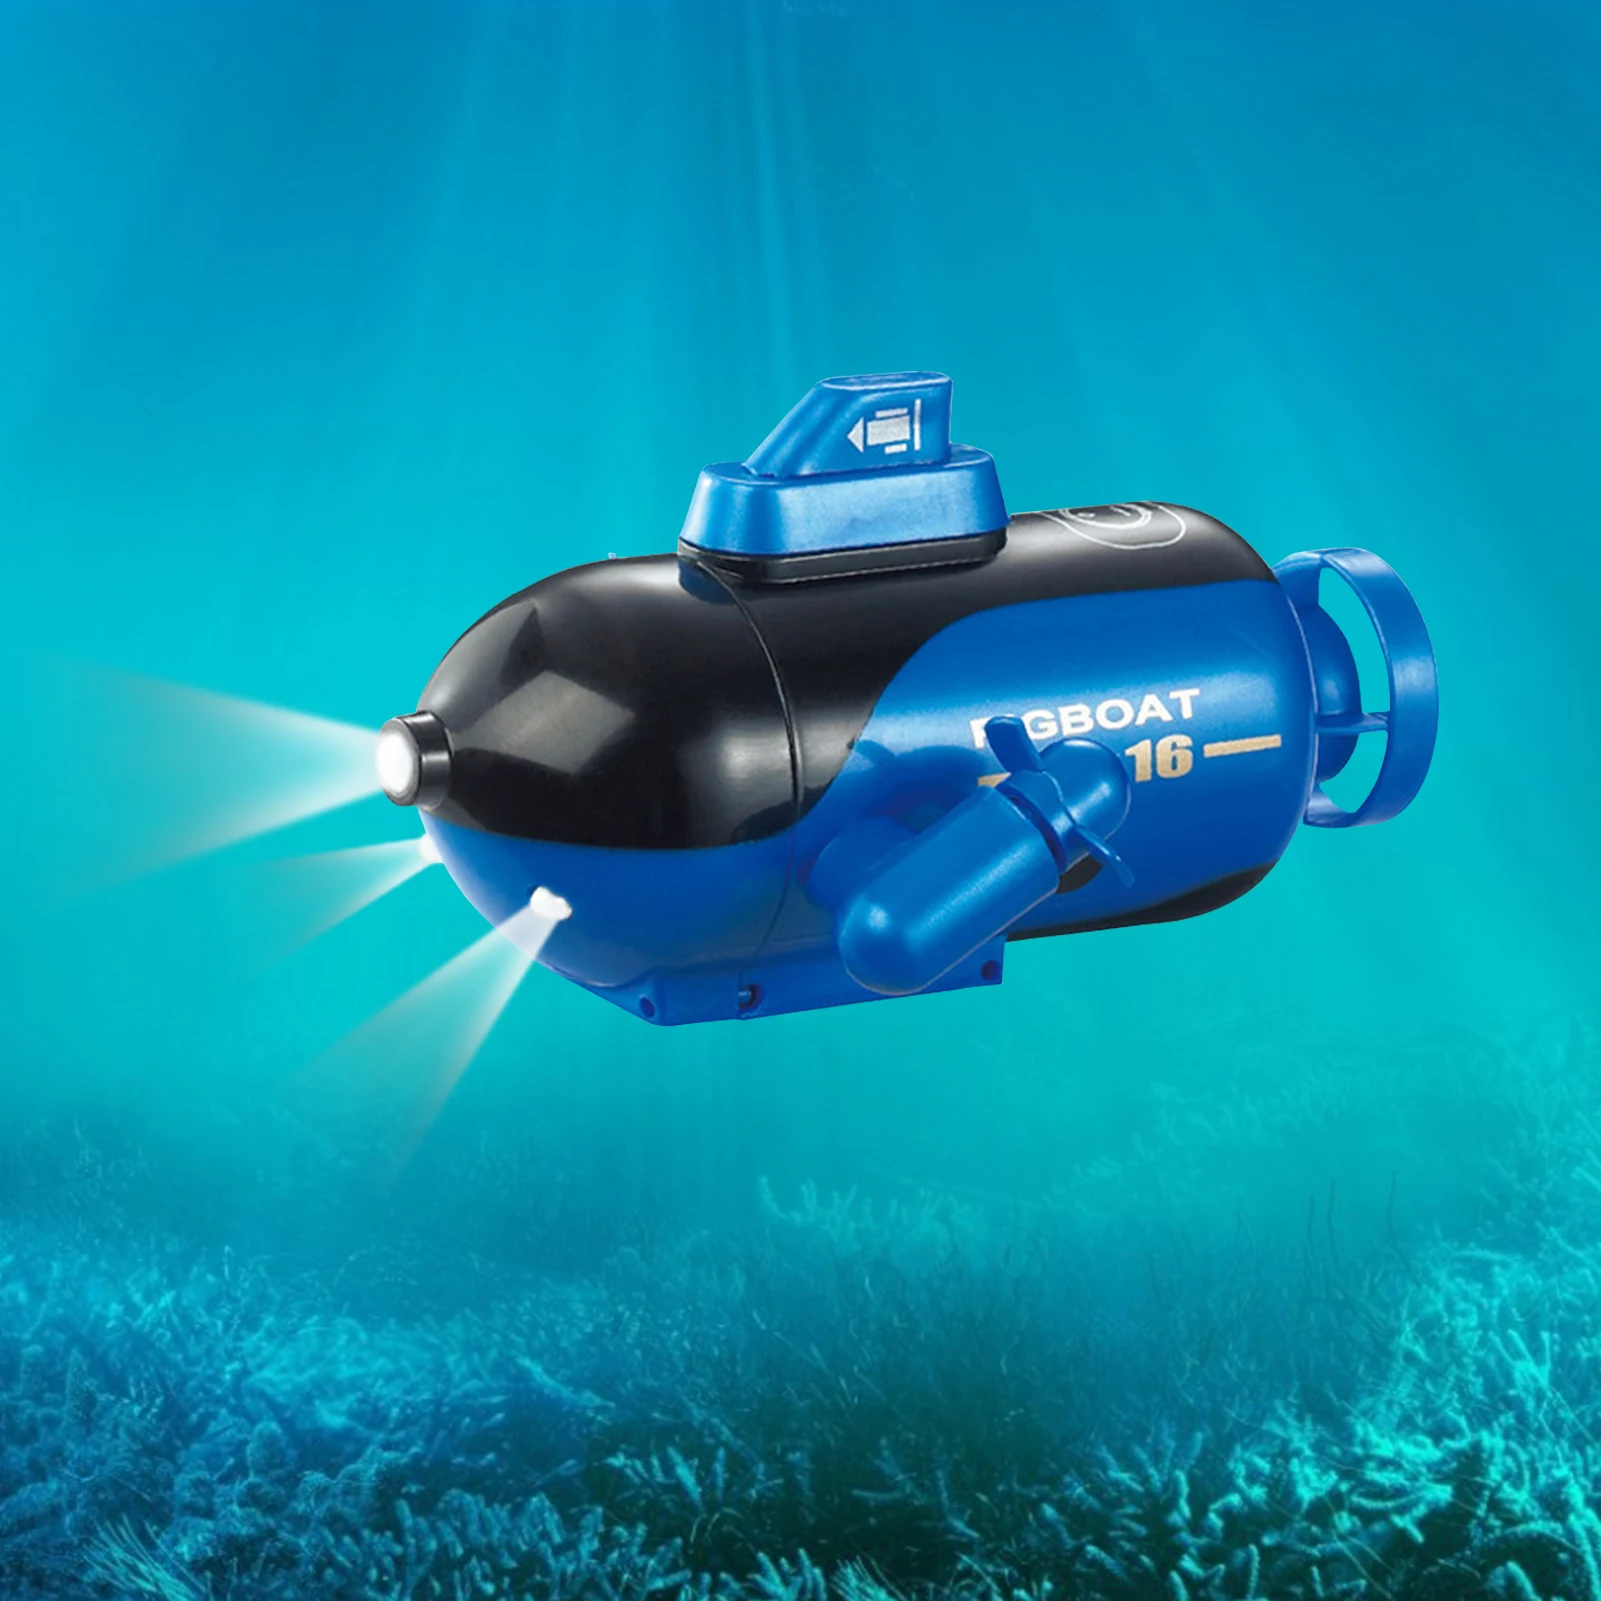 

Mini Radio Racing RC Submarine Remote Control Boat Ship RC Toy Induction Simulation Bathtub Pools Lakes Boat Kids Gift